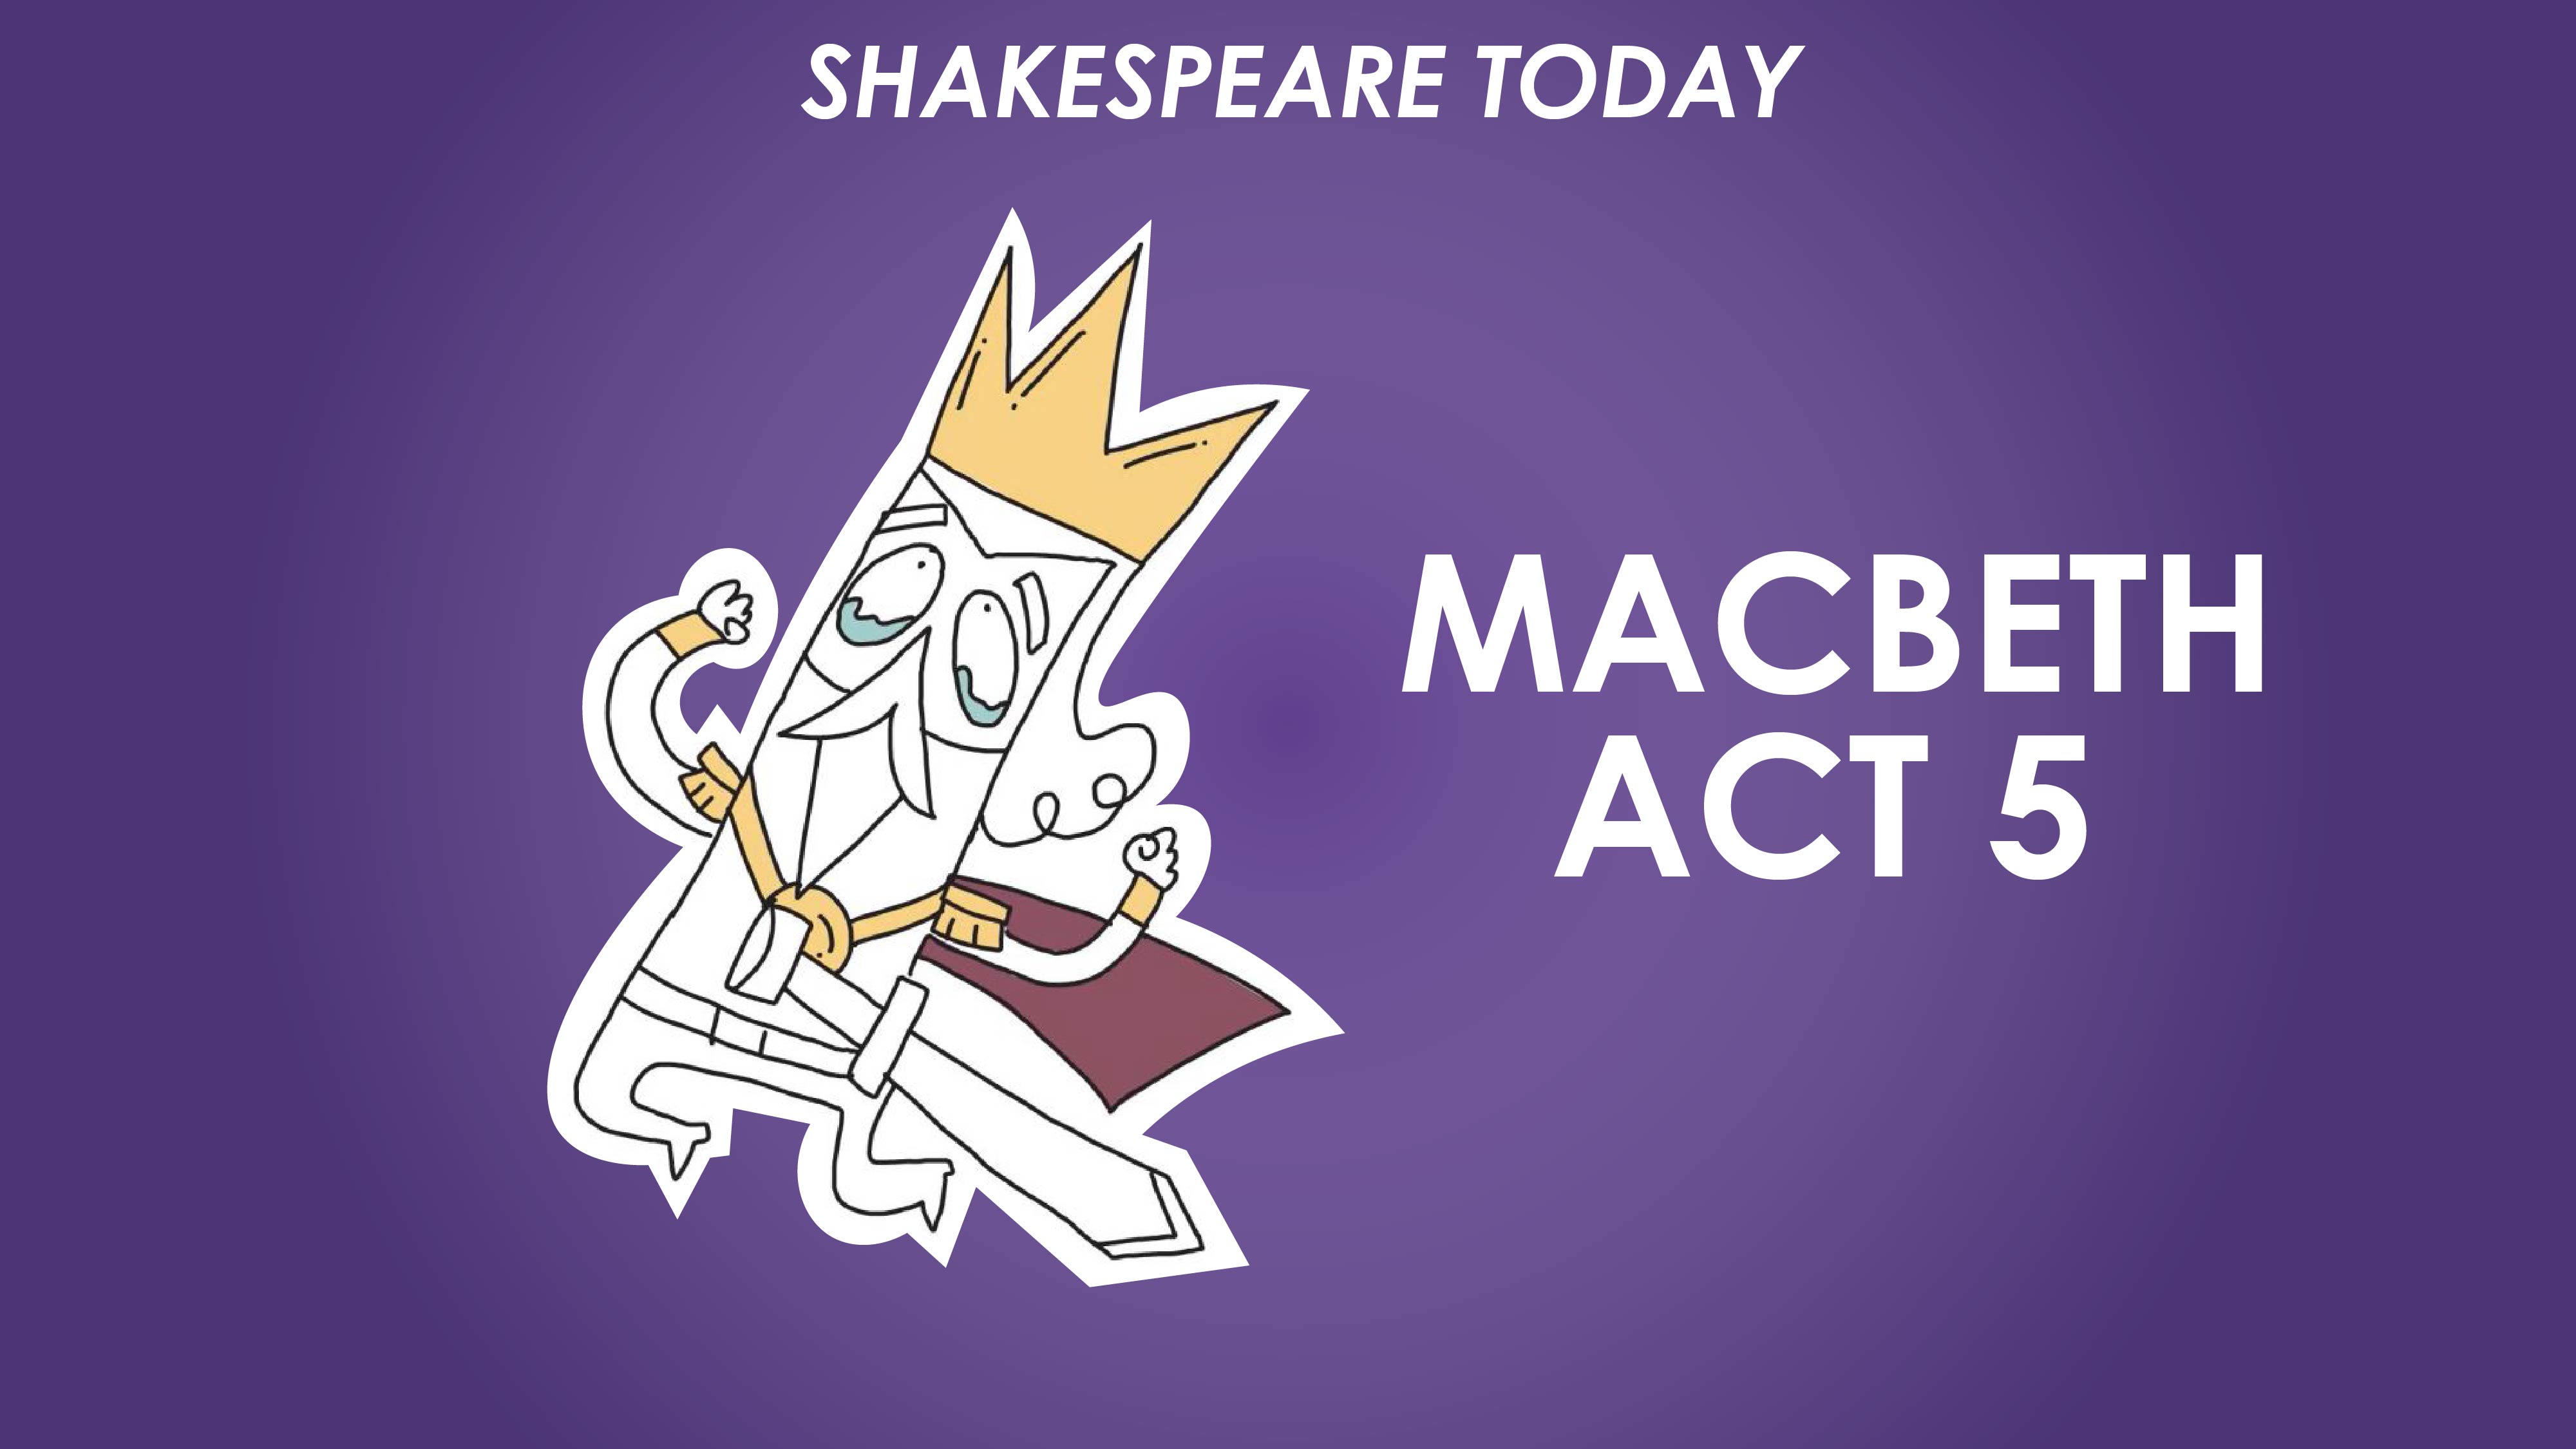 Macbeth Act 5 Summary - Shakespeare Today Series